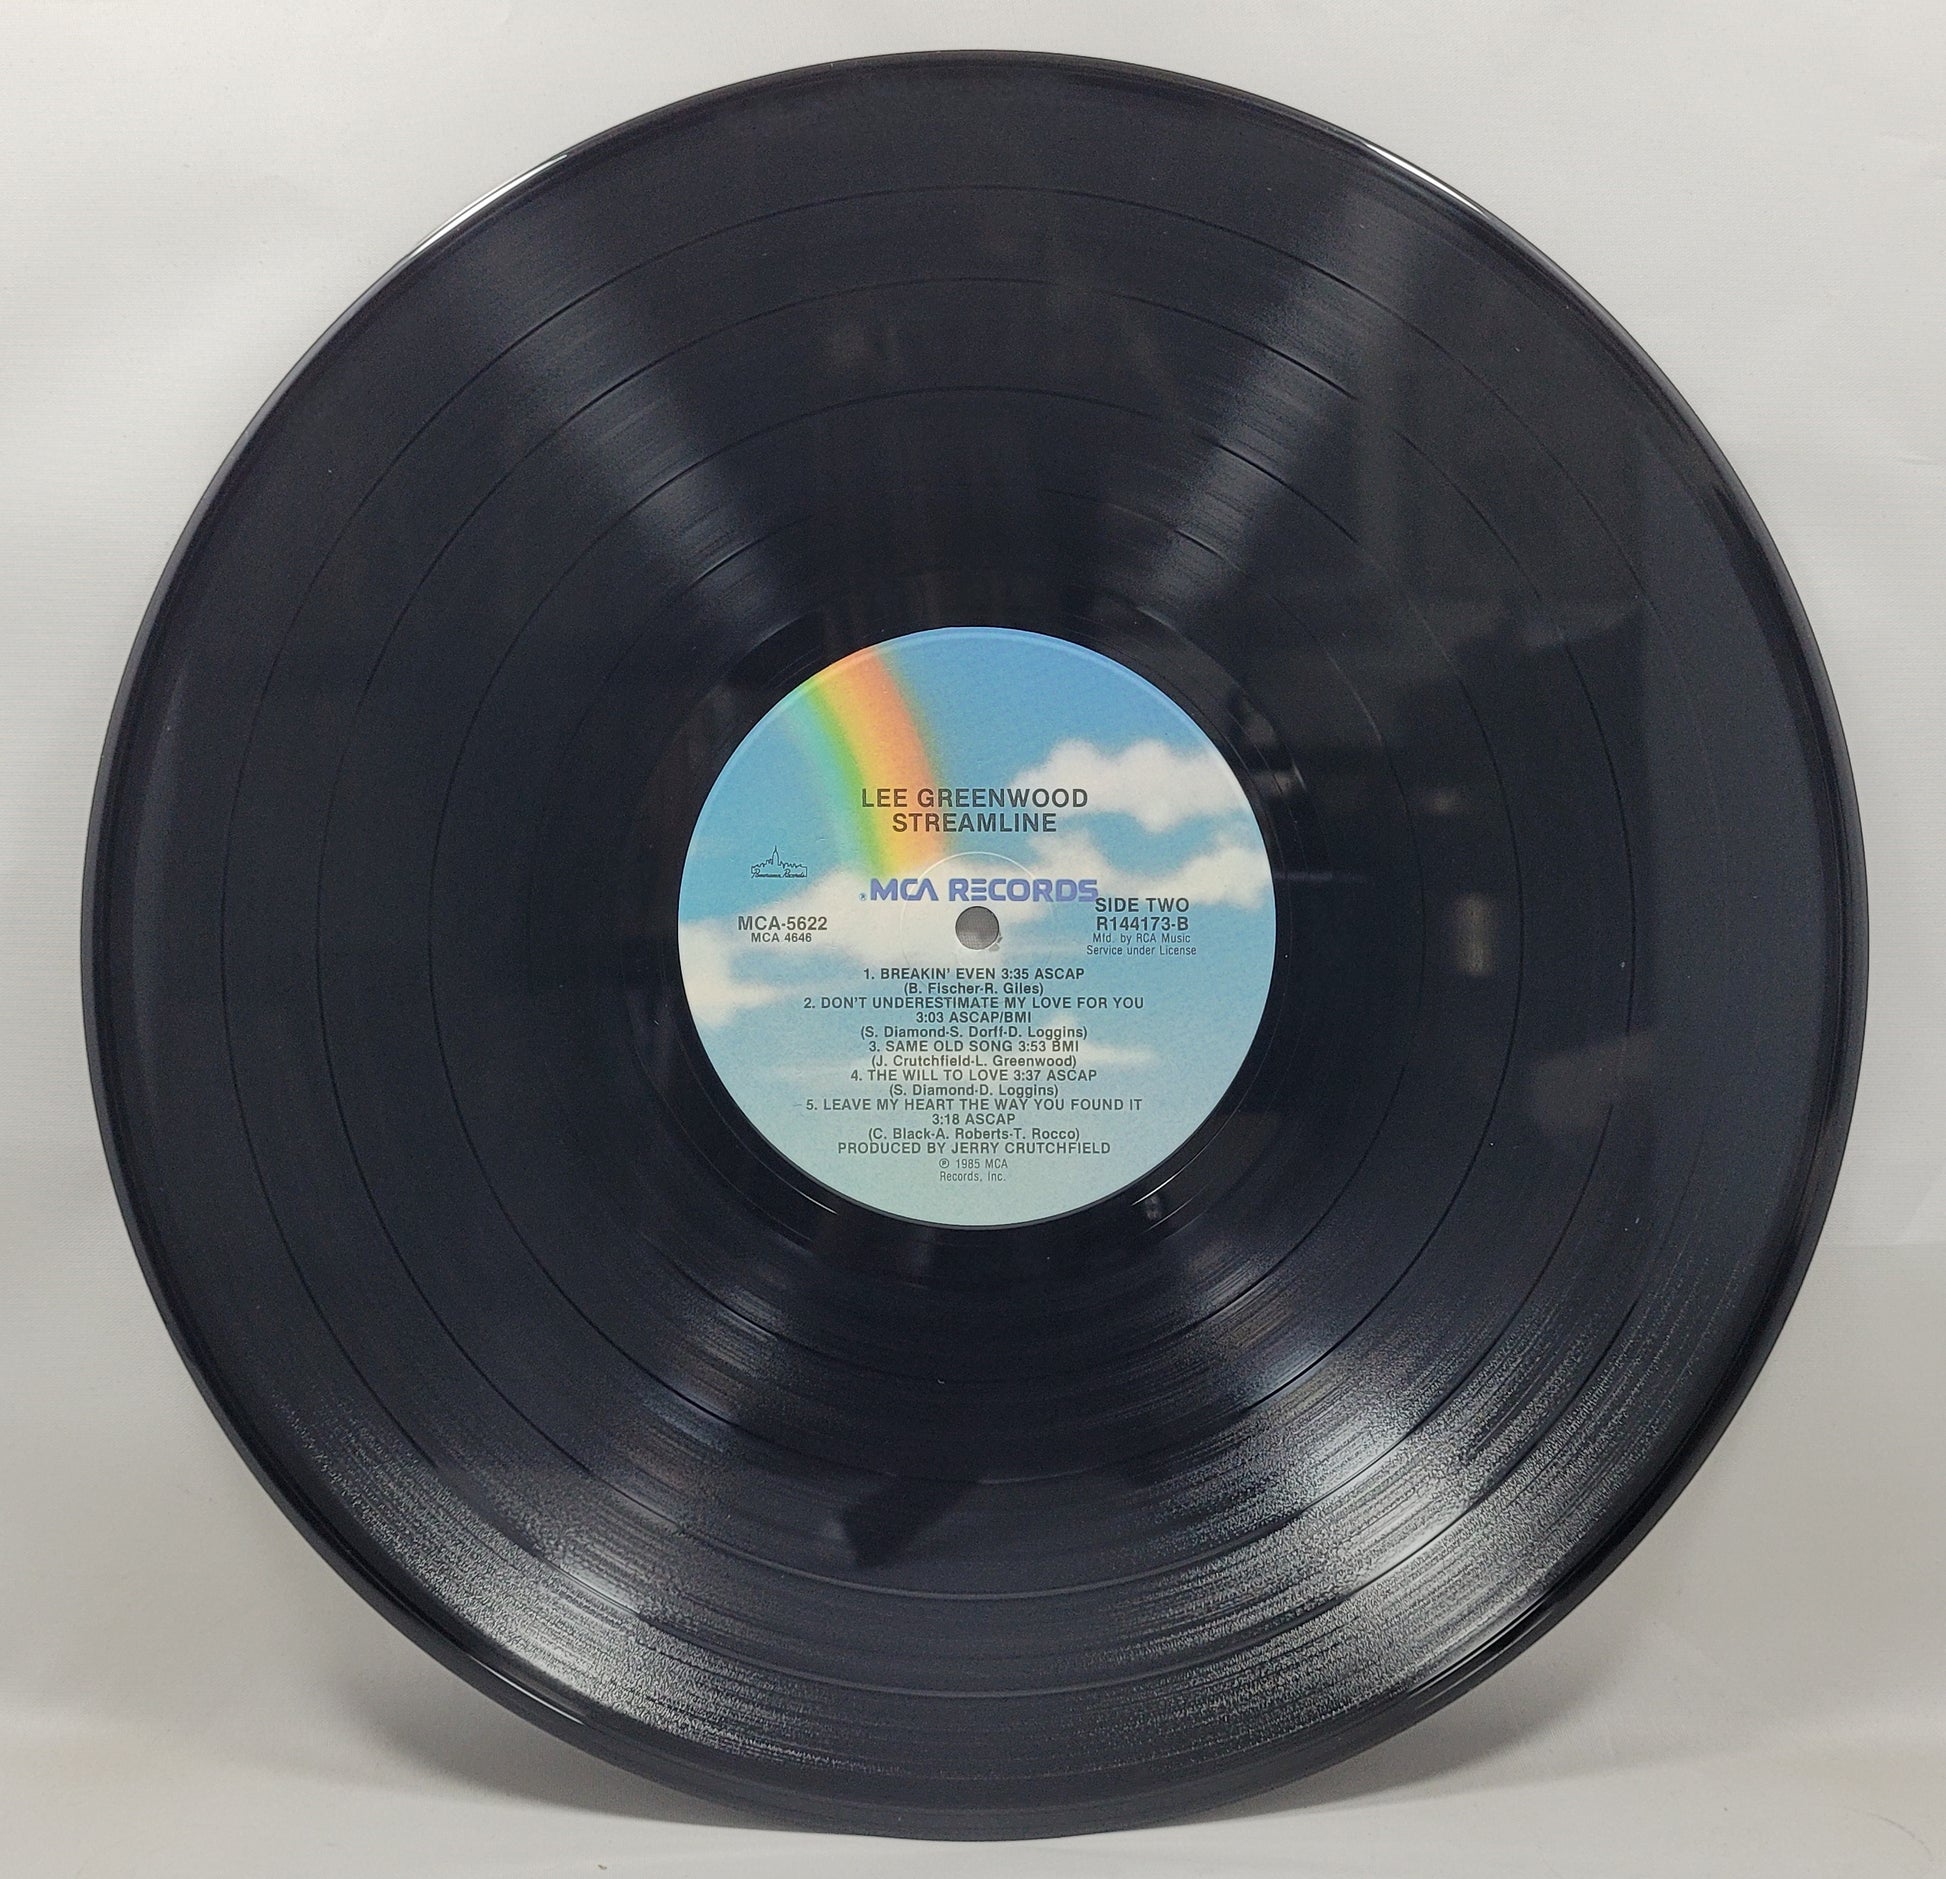 Lee Greenwood - Streamline [1985 Club Edition] [Used Vinyl Record LP]